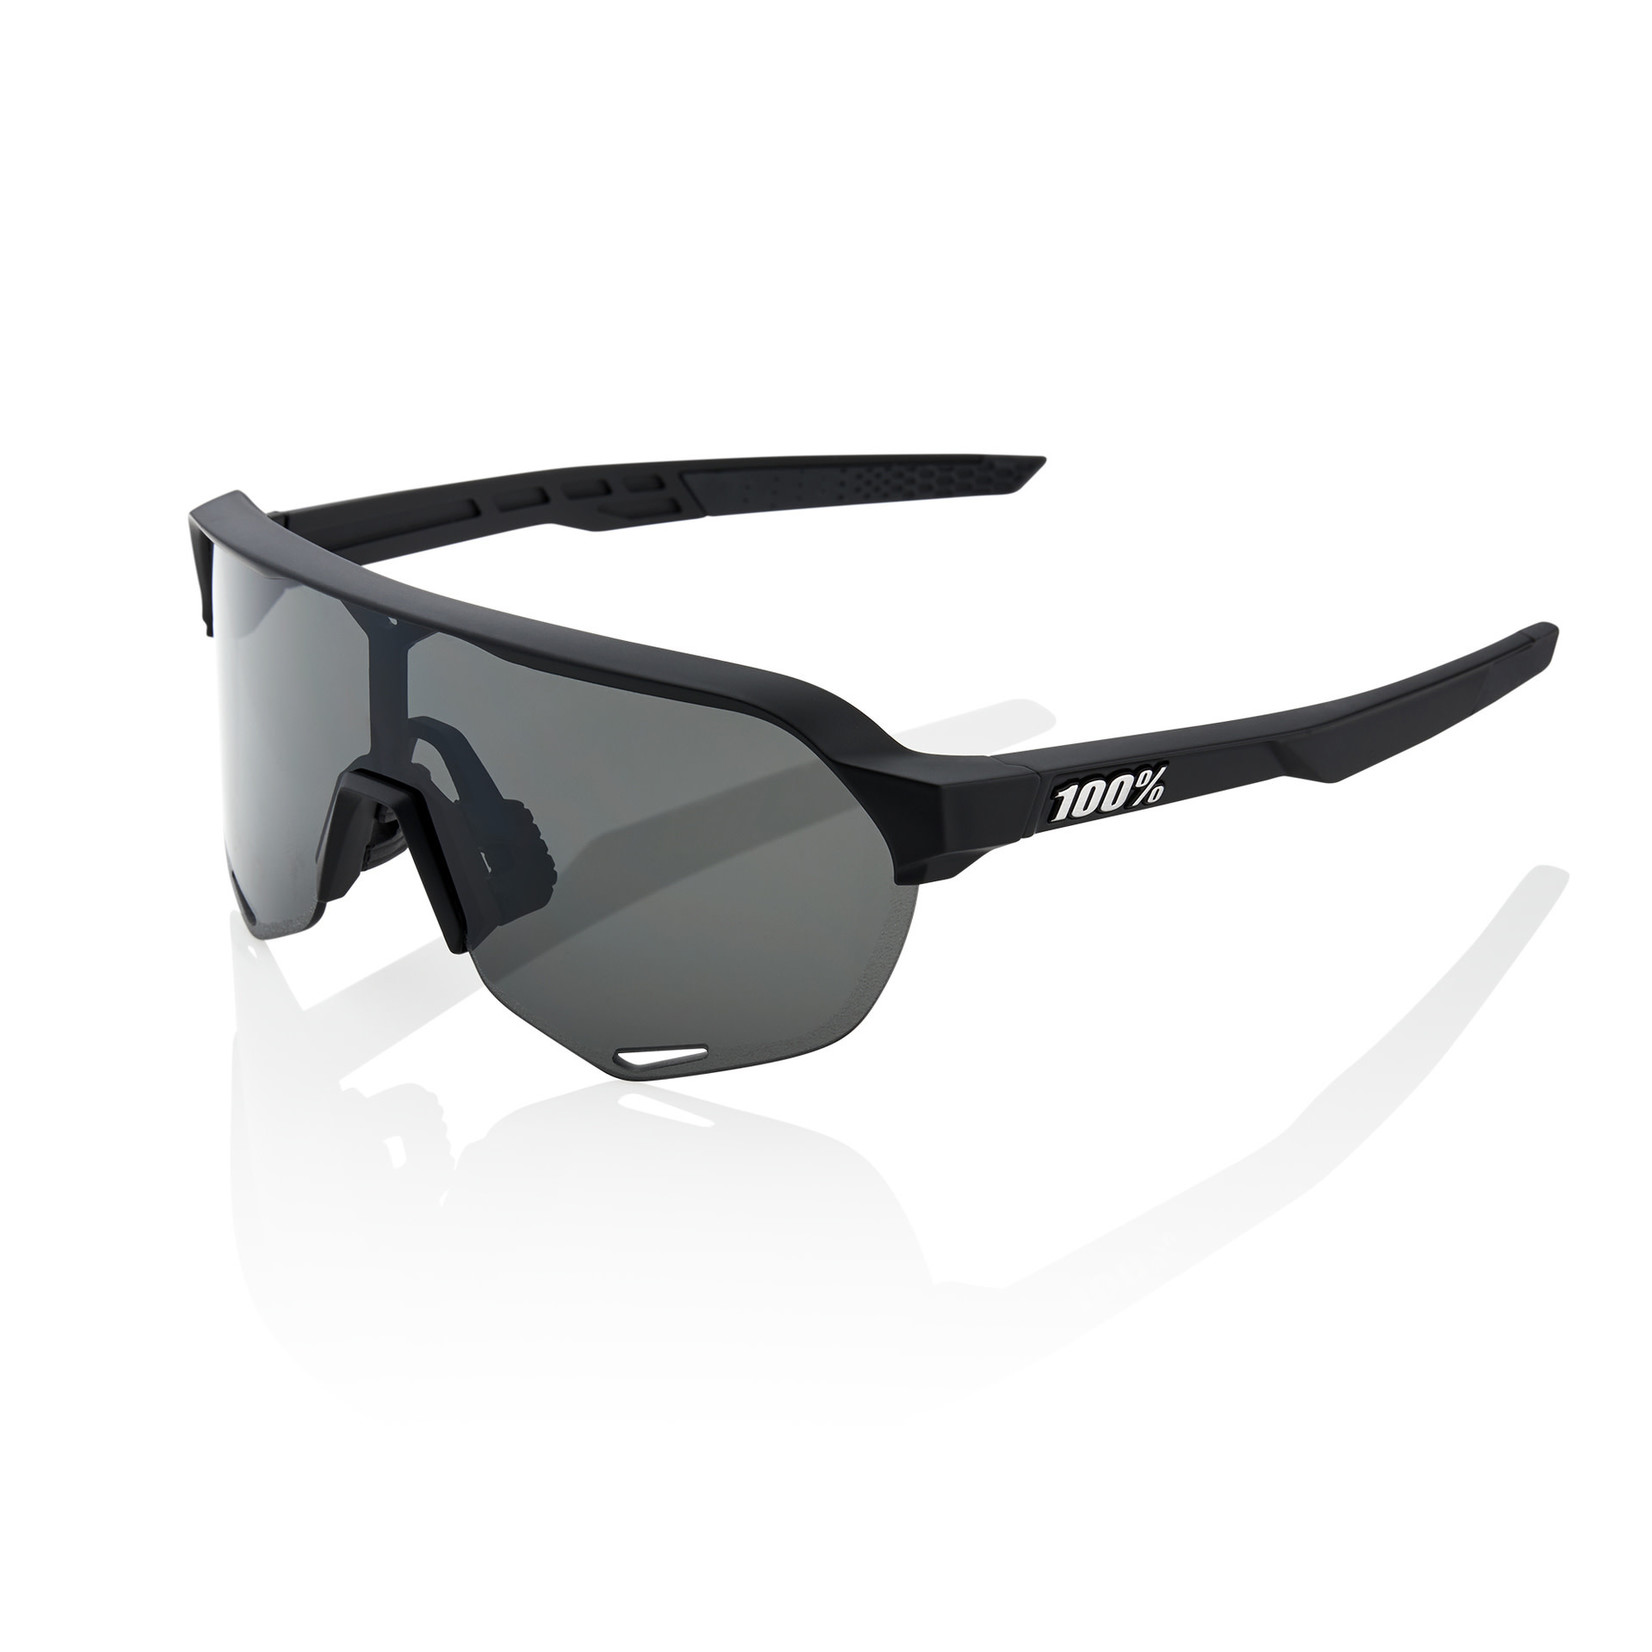 100 Percent 100% S2 Bike Eyewear - Soft Tact Black - Smoke 100% UV protection (UV400)